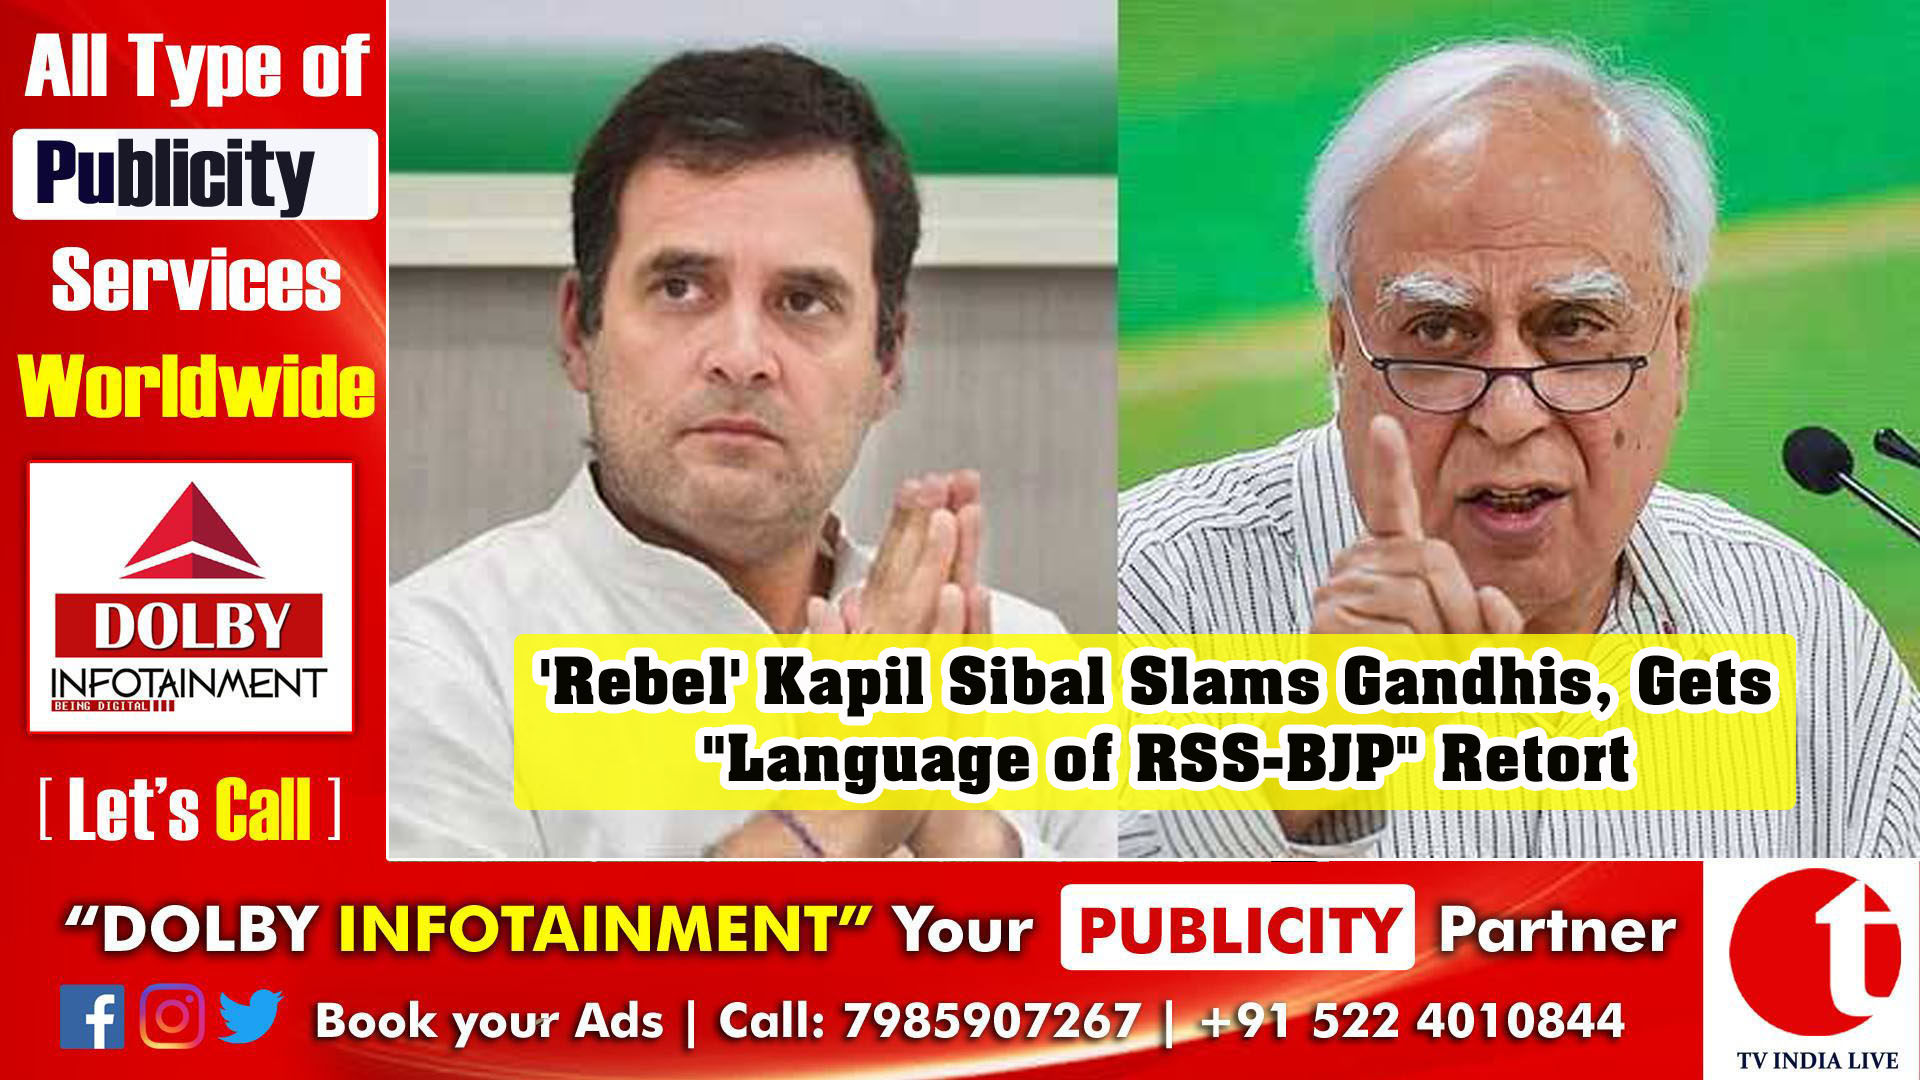 'Rebel' Kapil Sibal Slams Gandhis, Gets "Language of RSS-BJP" Retort